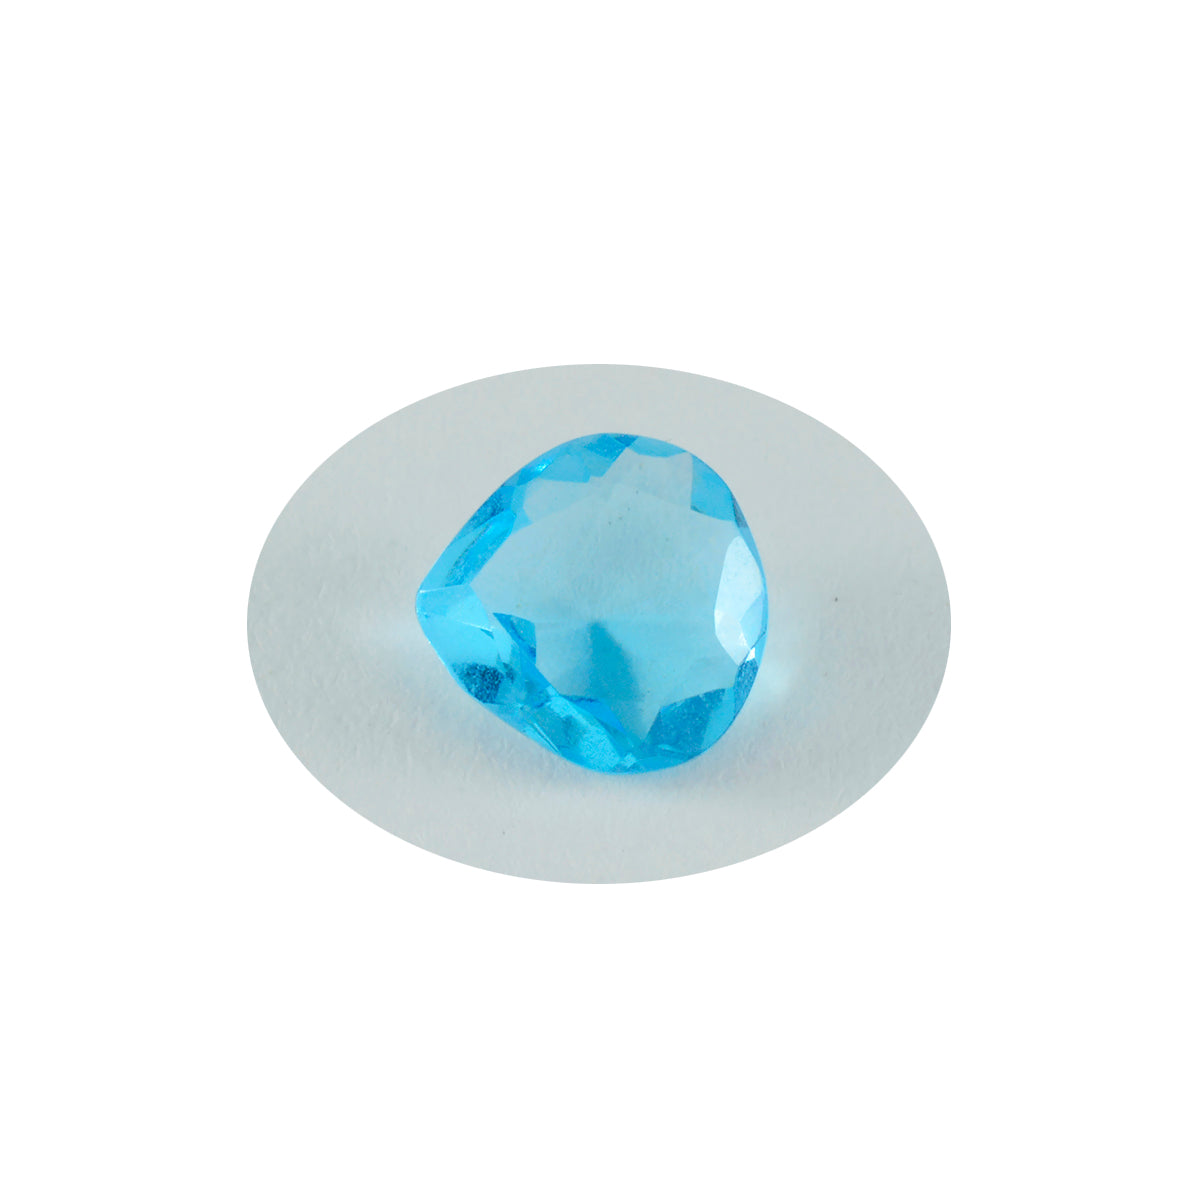 Riyogems 1PC Blue Topaz CZ Faceted 12x12 mm Heart Shape great Quality Gems